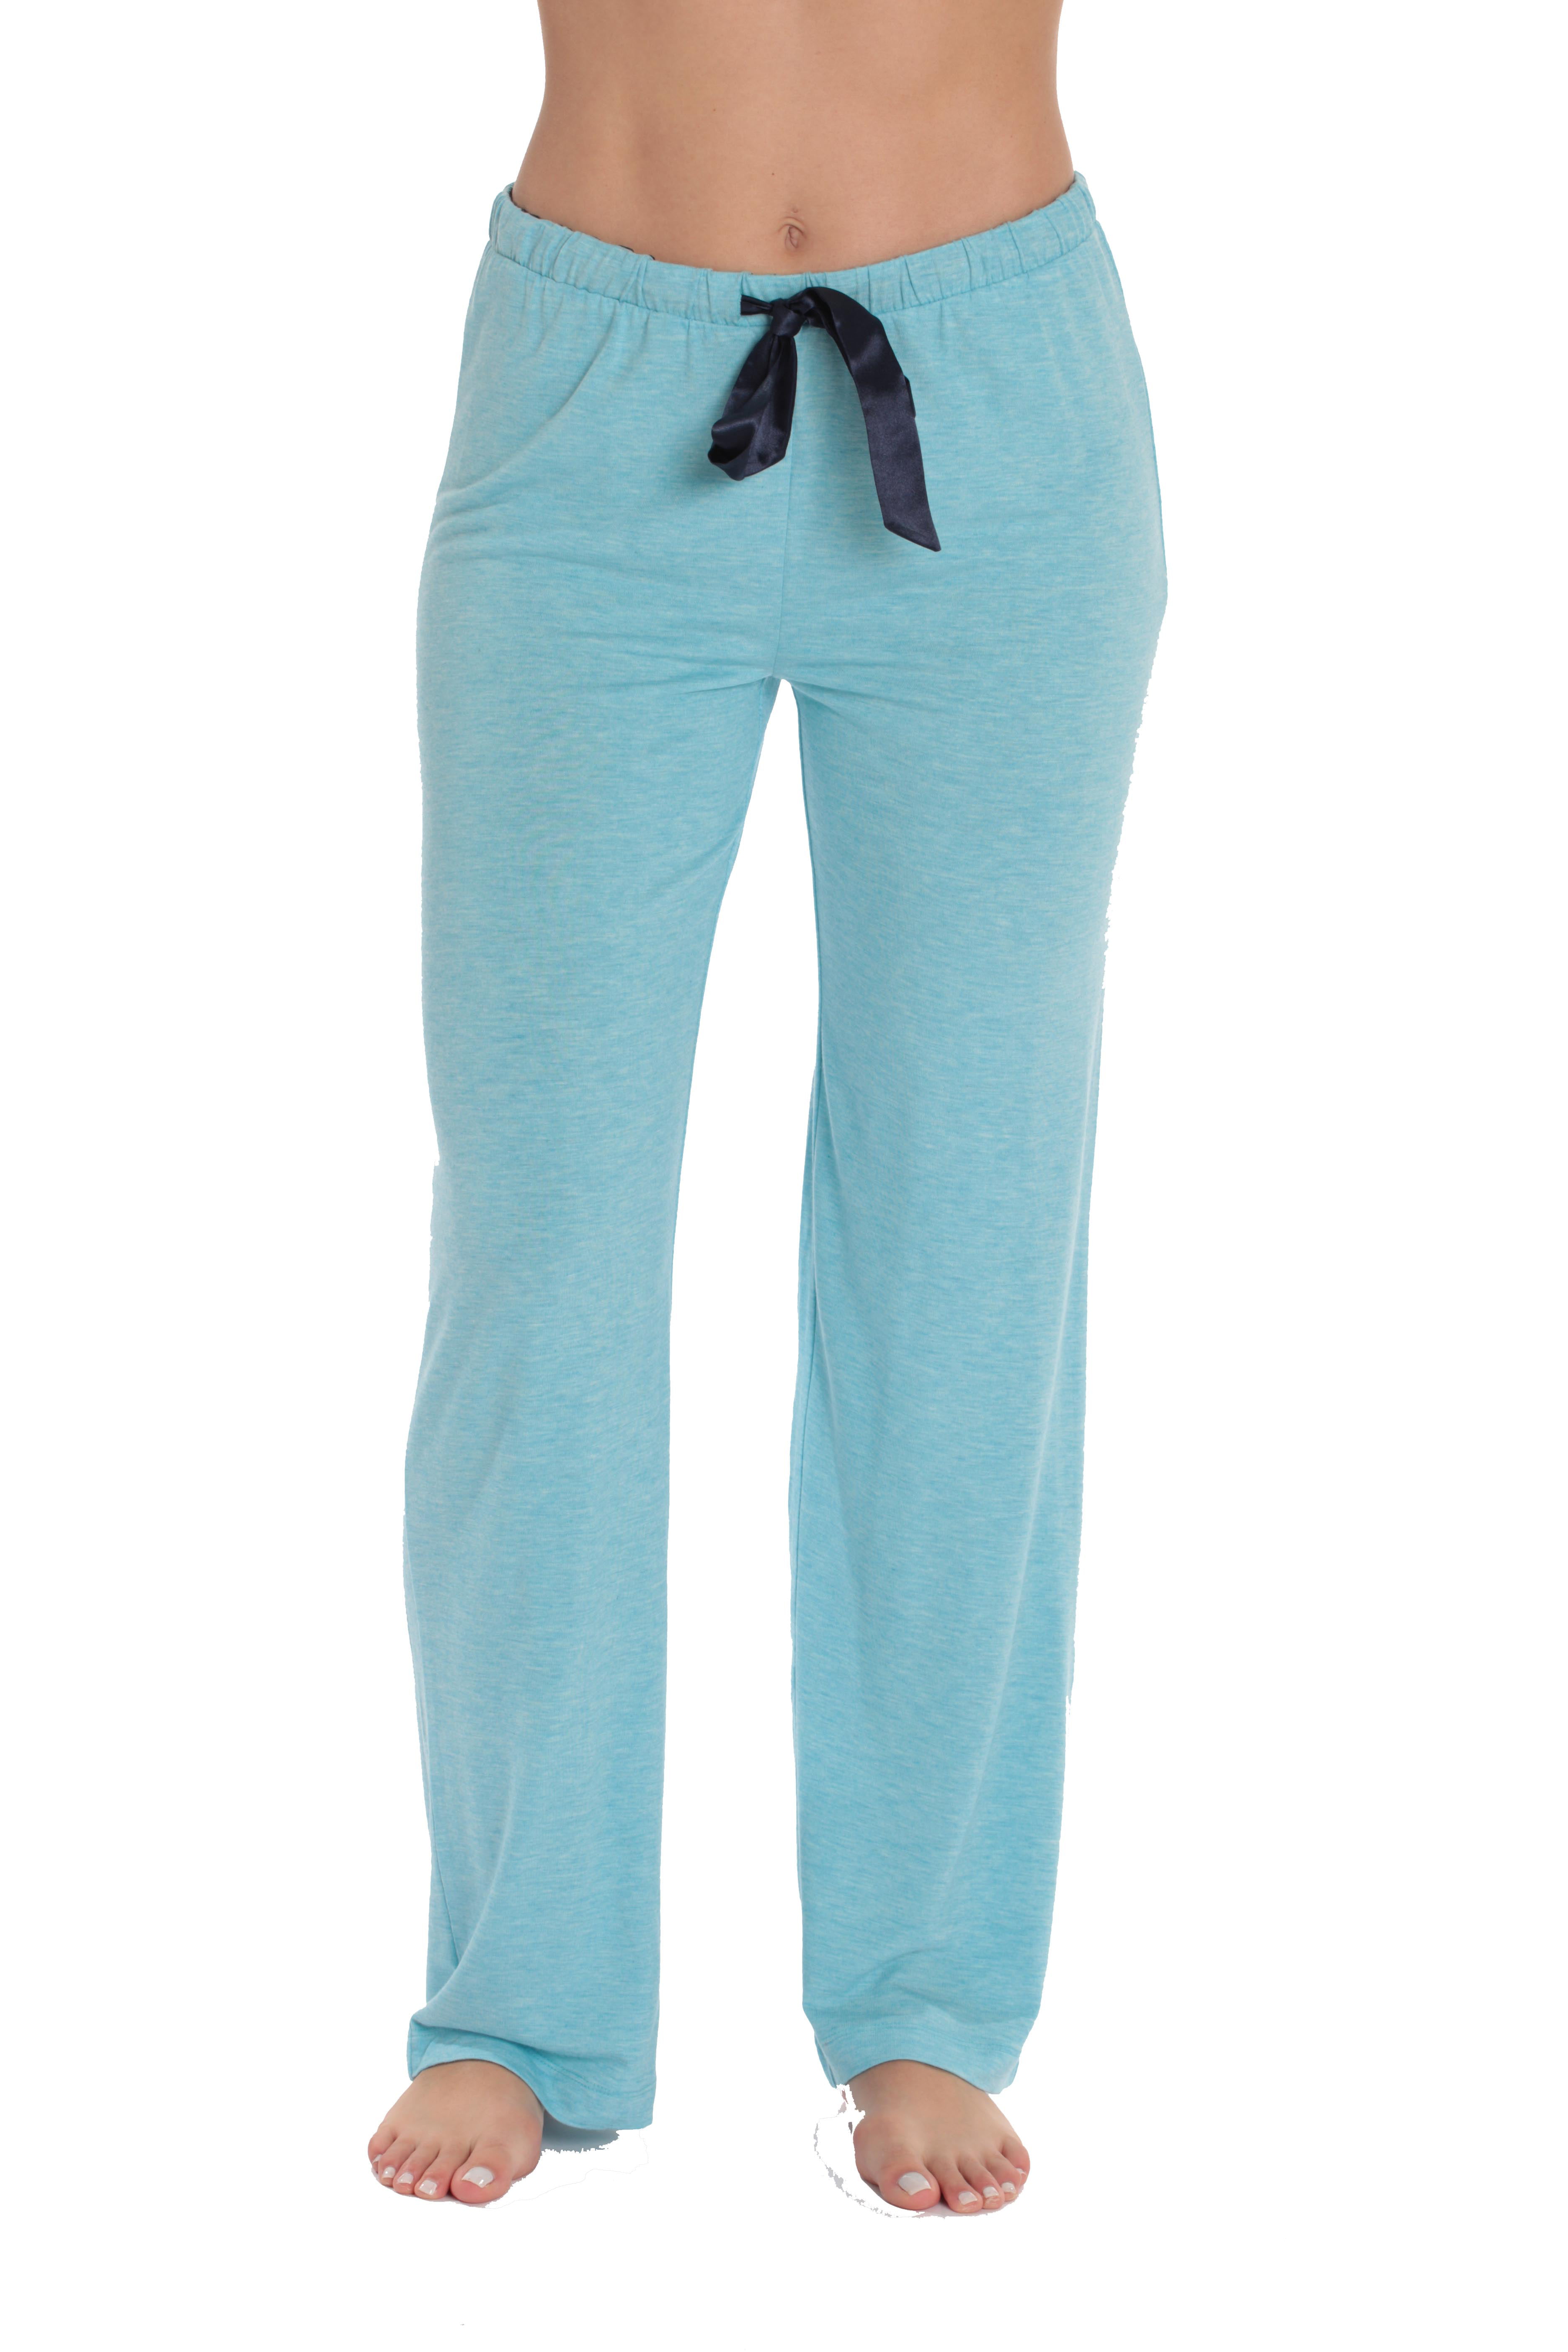 #followme Ultra Soft Solid Stretch Jersey Pajama Pants for Women (Aqua, 2X  Plus Plus)